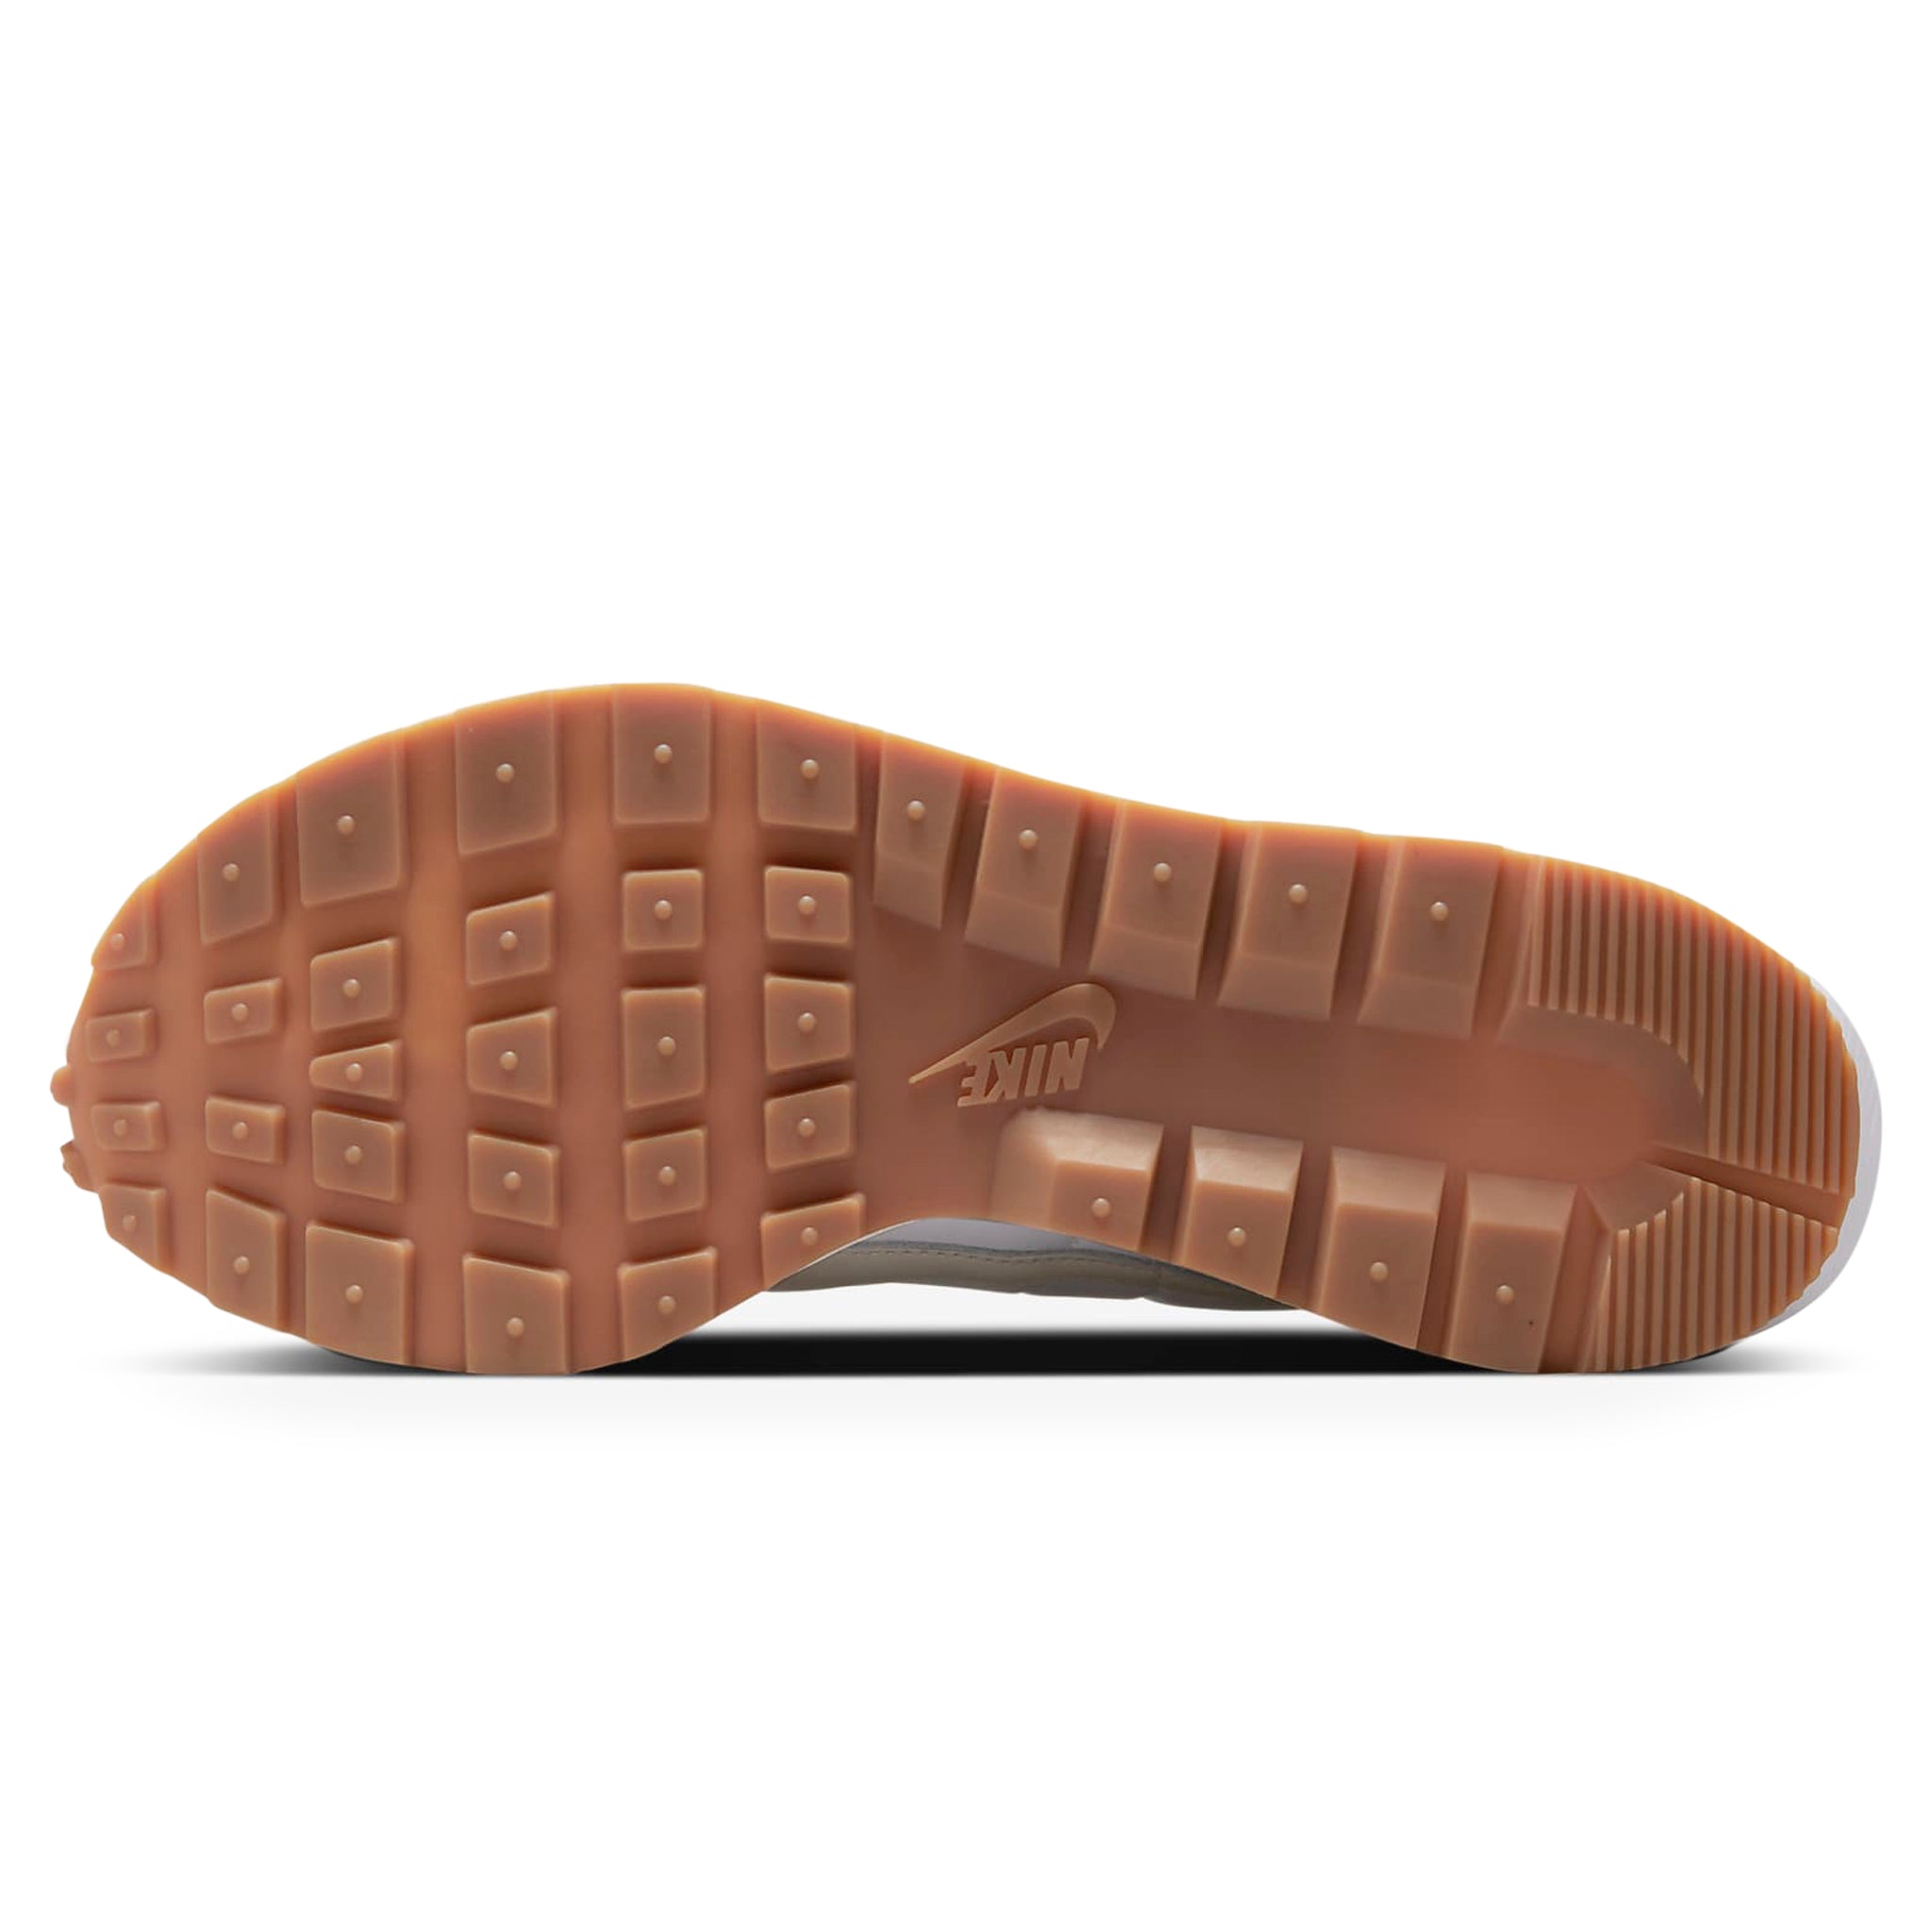 Sole view of Nike x Sacai Vaporwaffle Sail Gum Sneaker DD1875-100